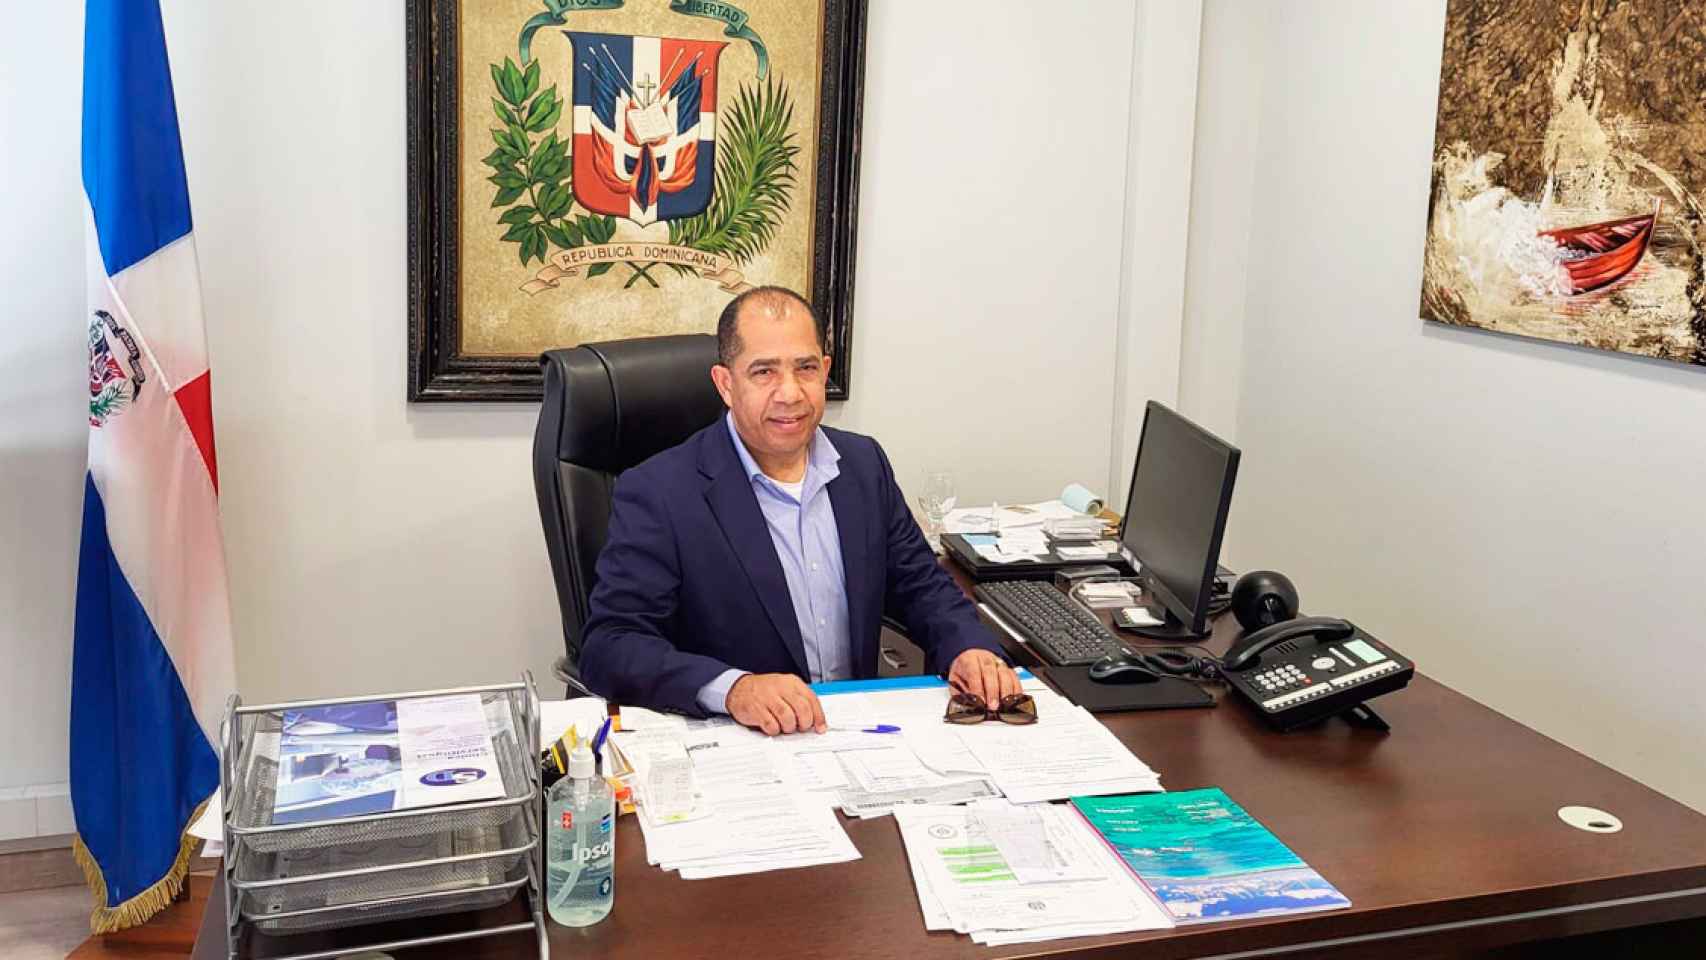 César Méndez, cónsul de Dominicana en Barcelona, en su oficina